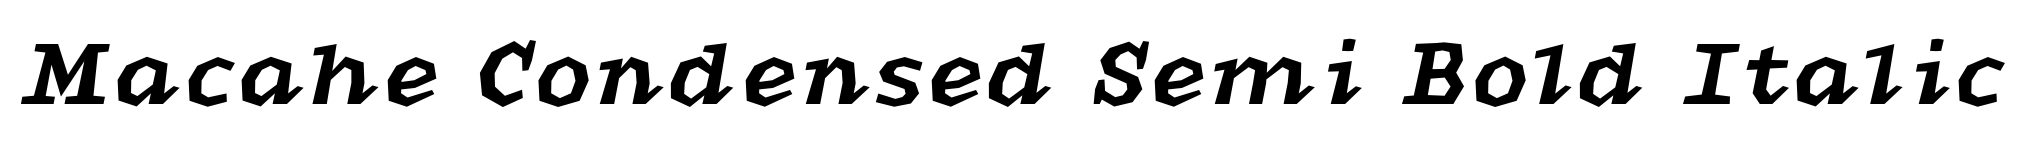 Macahe Condensed Semi Bold Italic image